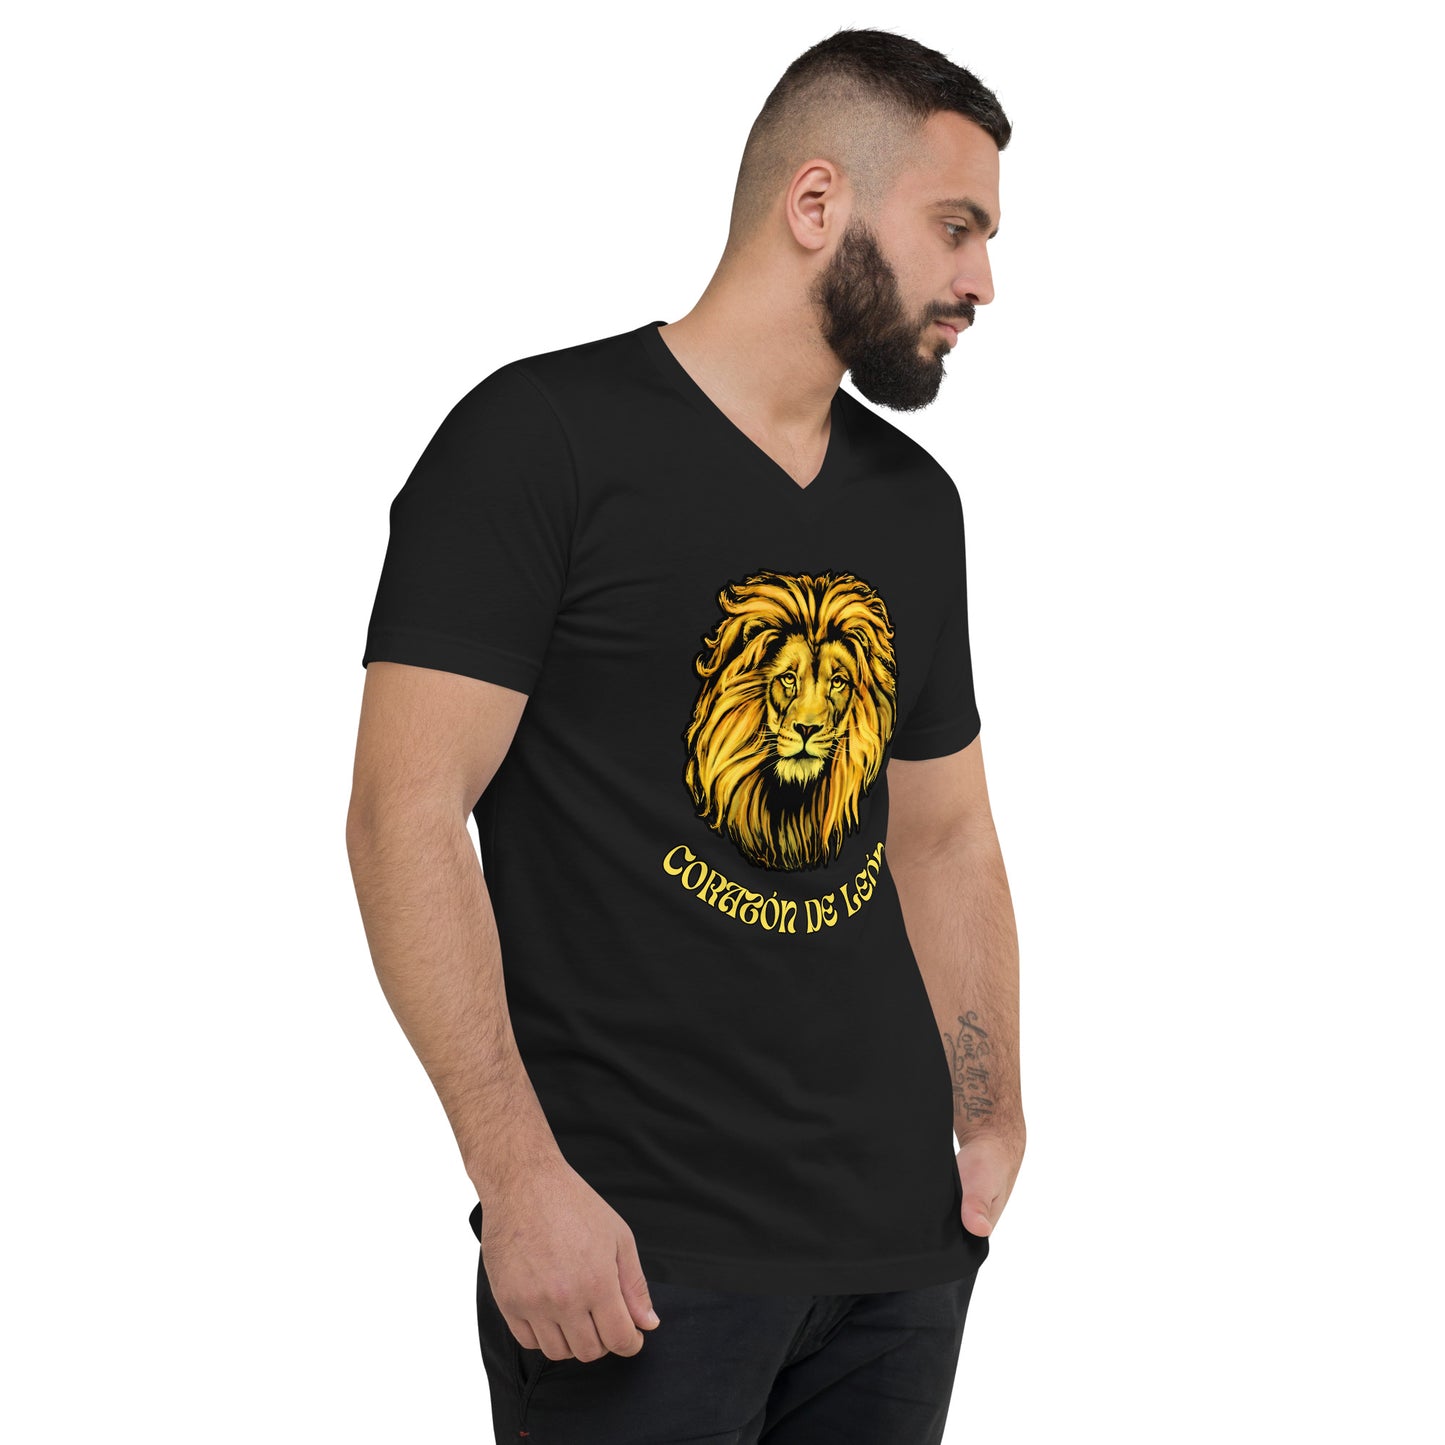 Lionheart - short sleeve t-shirt, v-neck